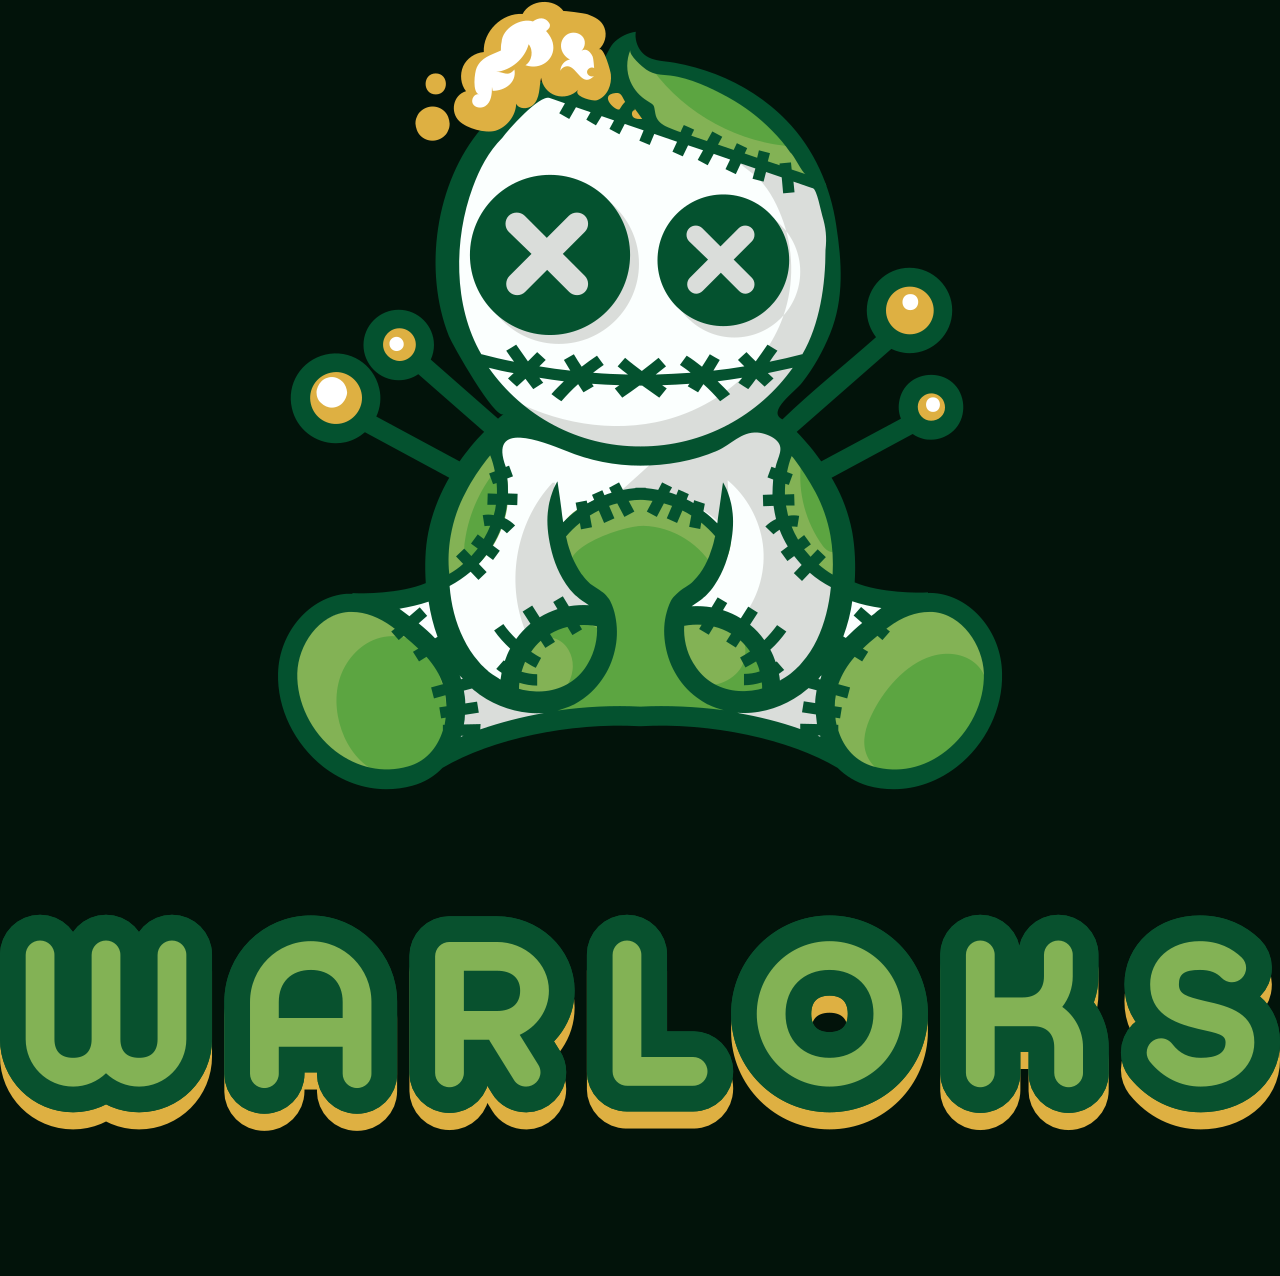 Warloks's logo